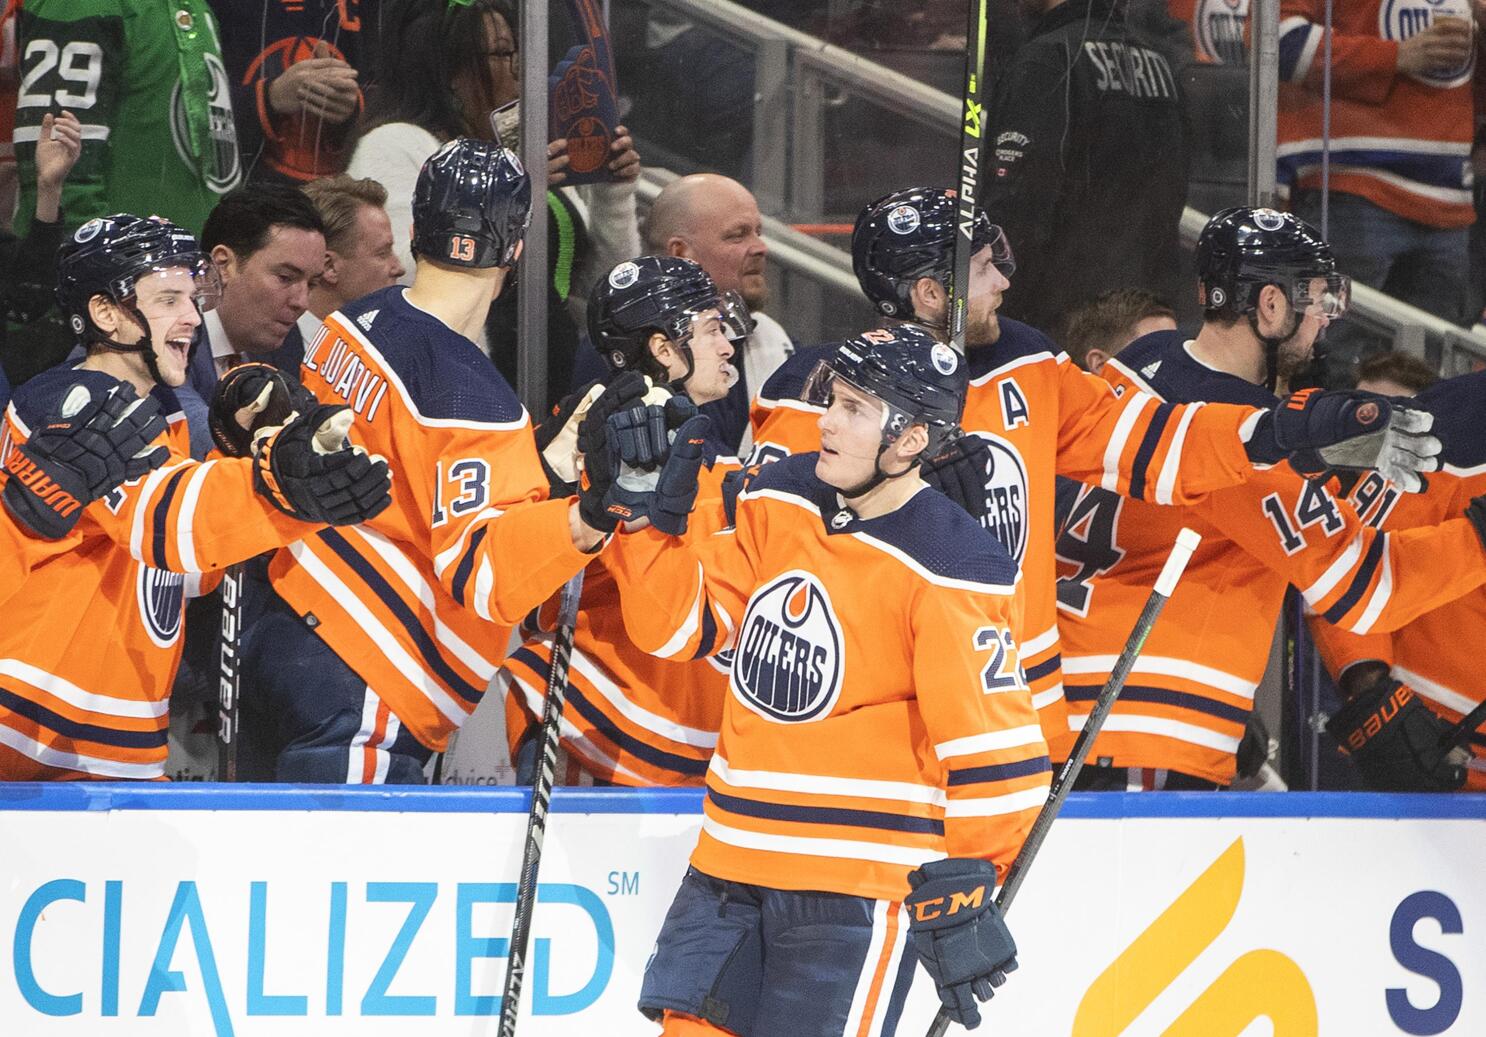 Oilers prove victorious in Battle of Alberta series